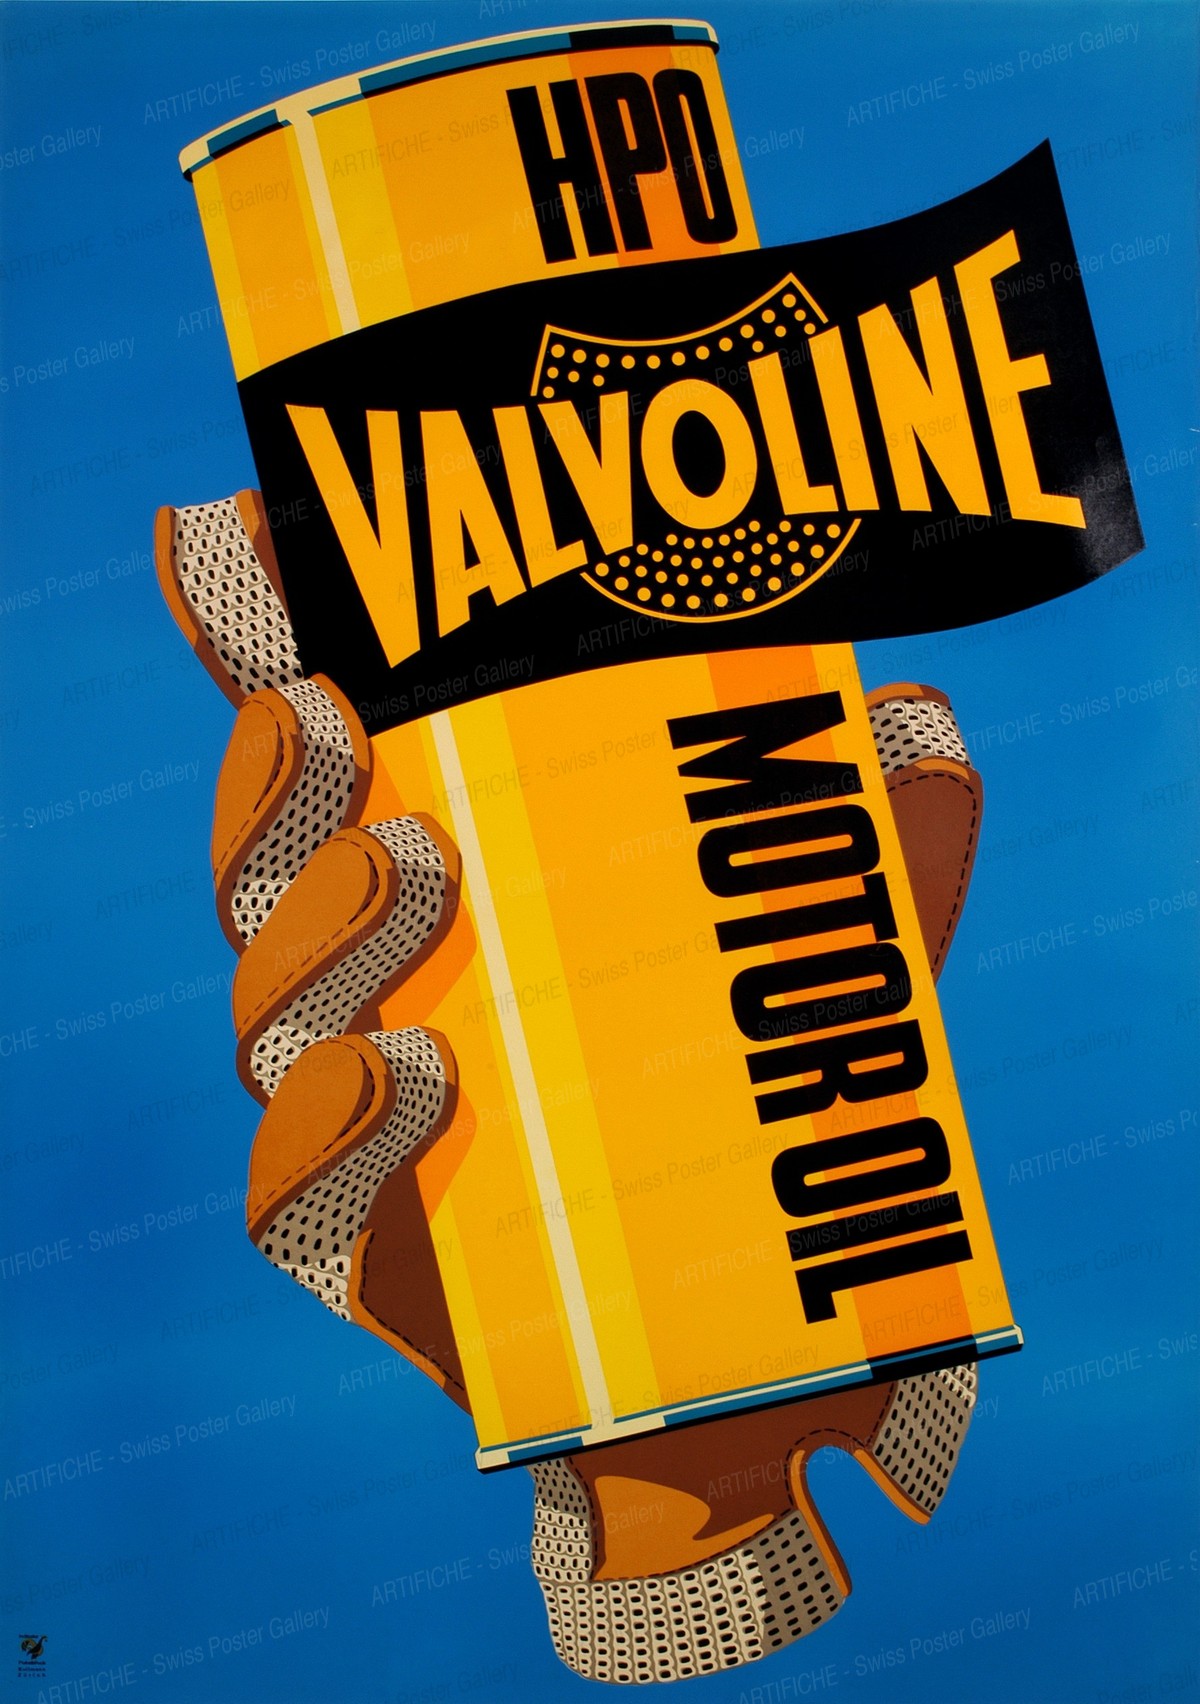 Valvoline Motor Oil, Artist unknown